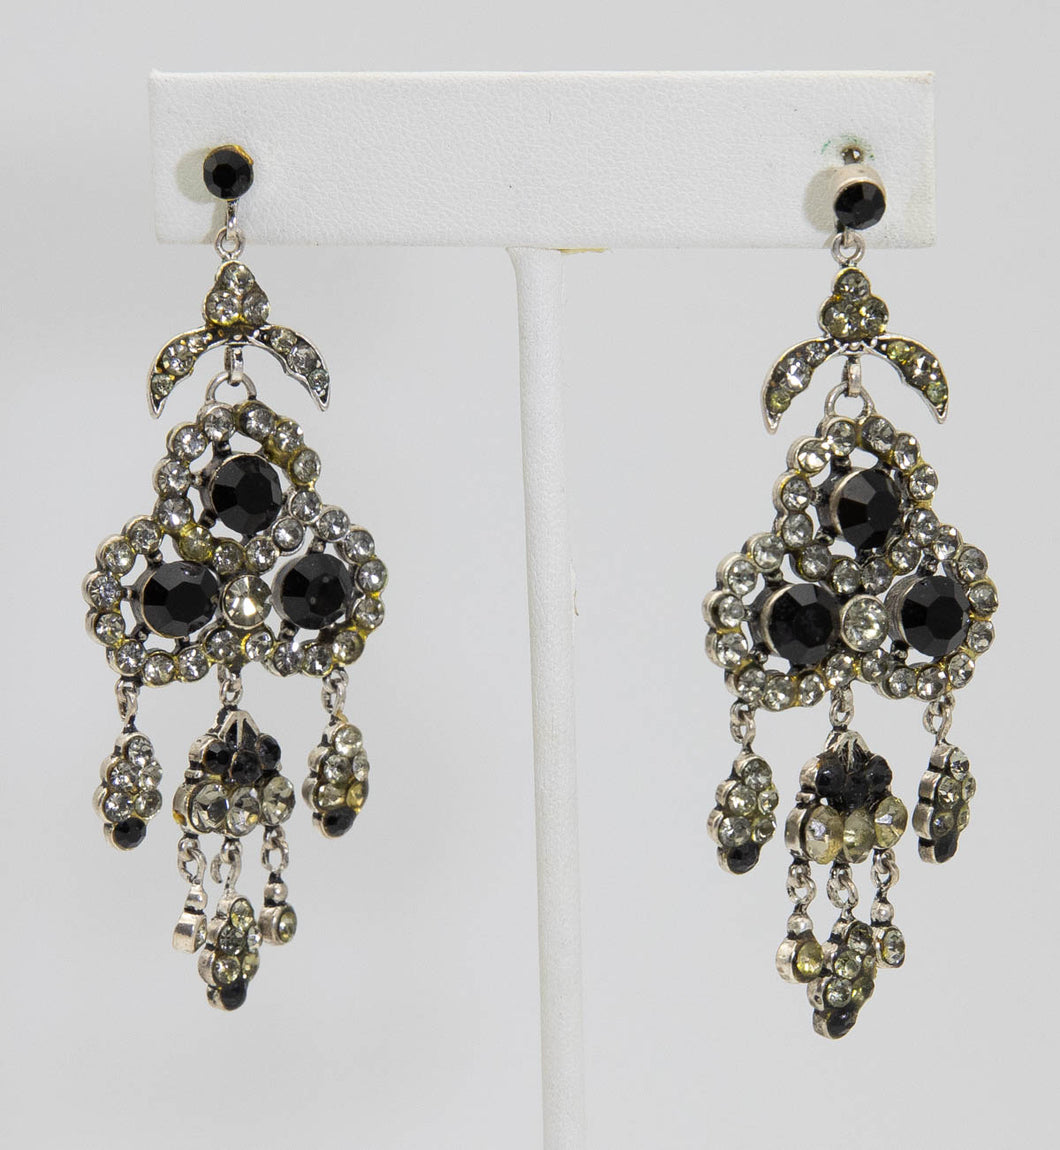 Vintage Drop Black and Clear Rhinestone Pierced Earrings - JD10832